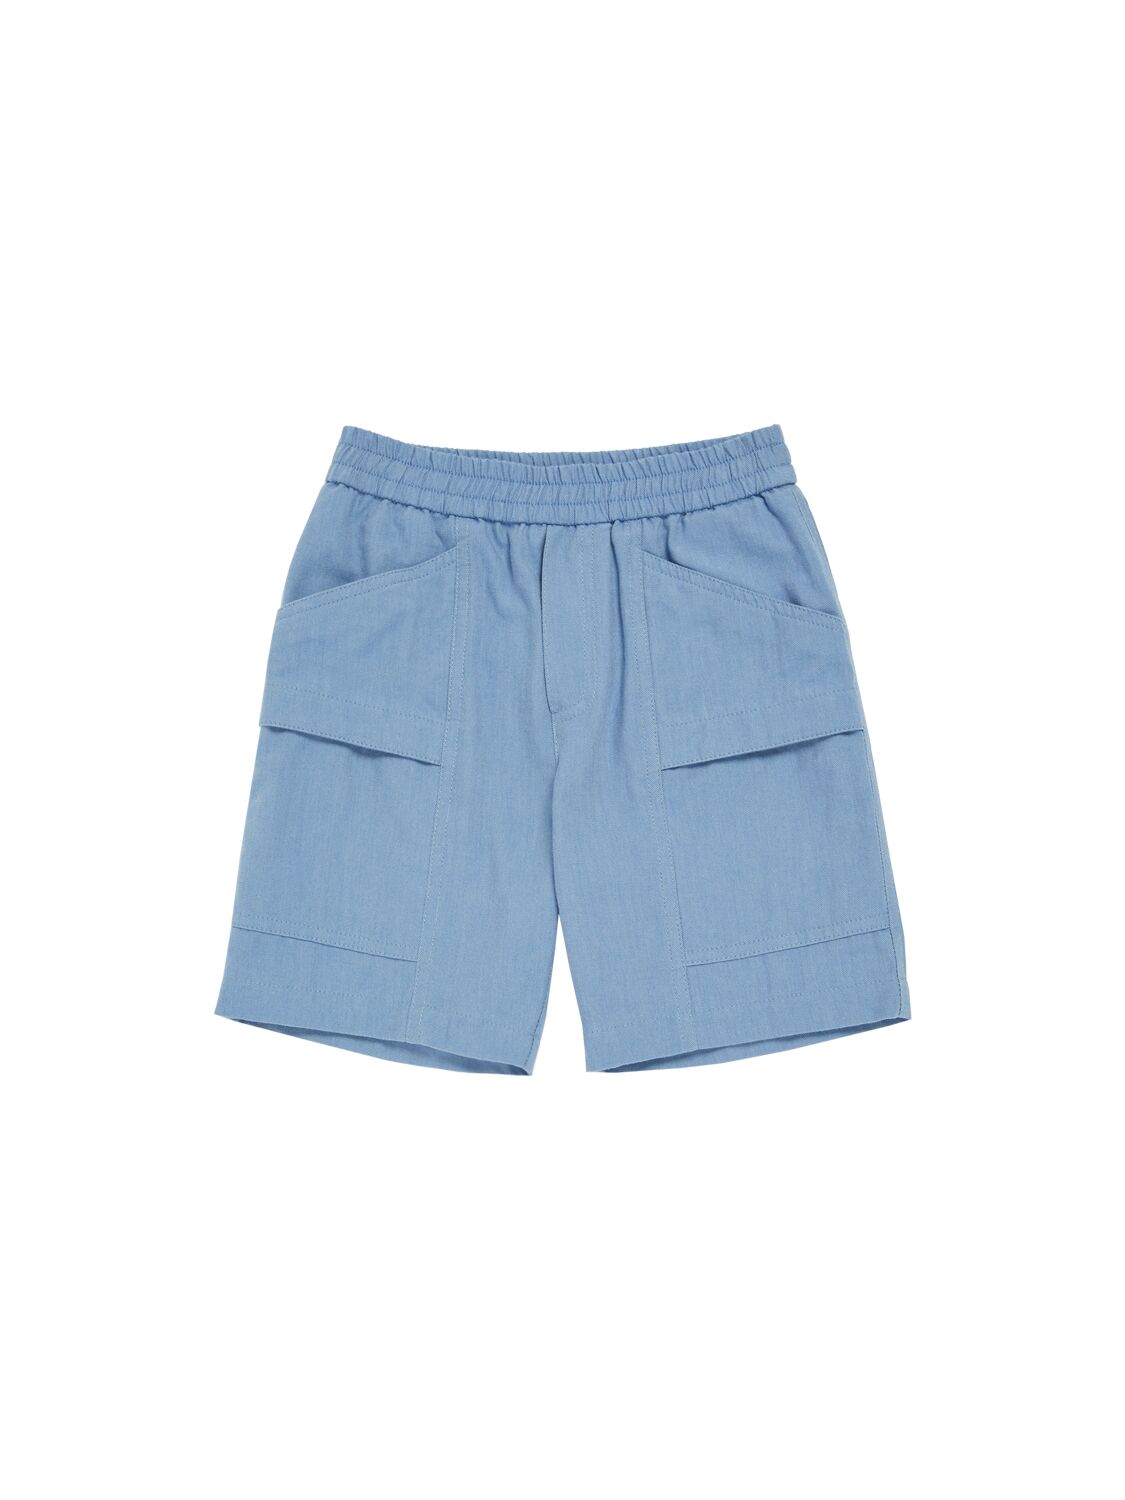 Image of Lightweight Cotton Denim Bermuda Shorts